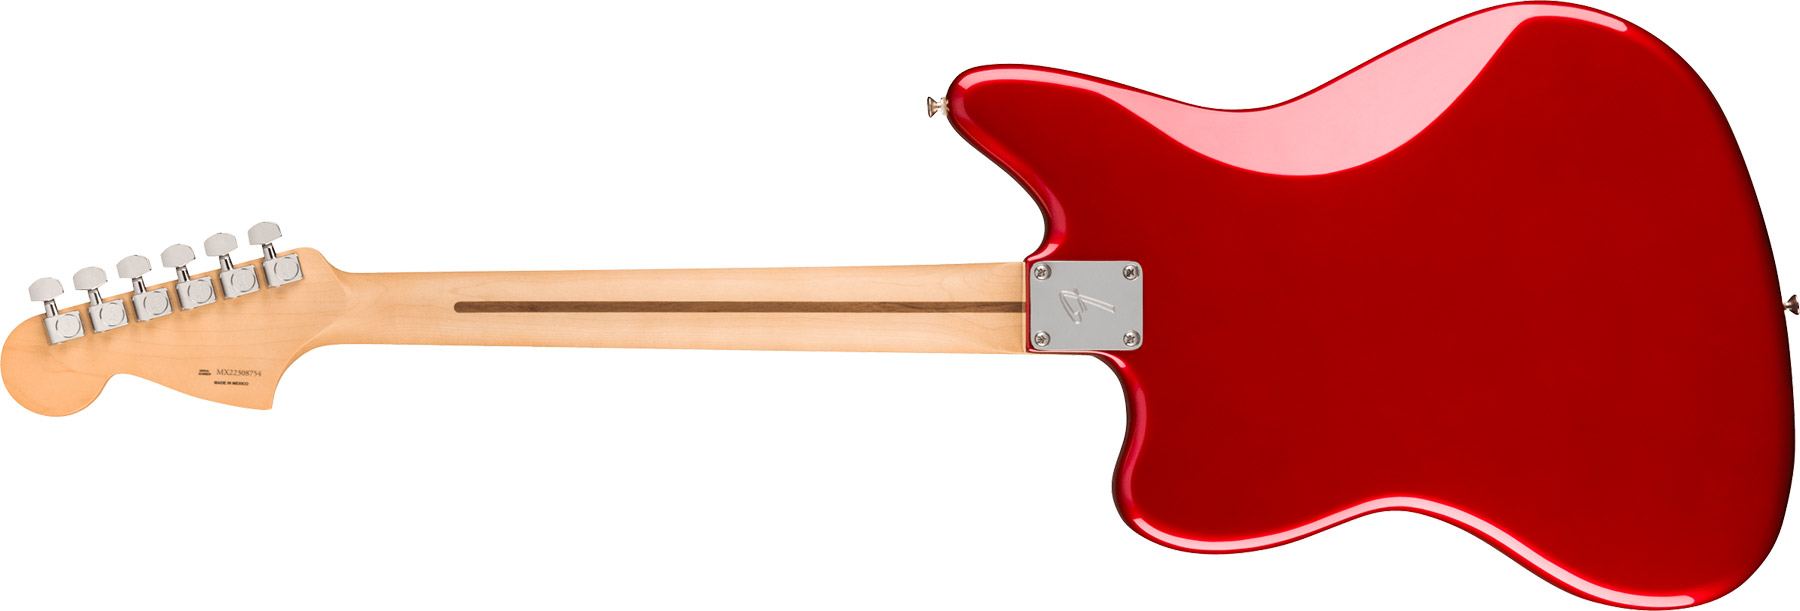 Fender Jaguar Player Mex 2023 Hs Trem Pf - Candy Apple Red - Retro-rock elektrische gitaar - Variation 1